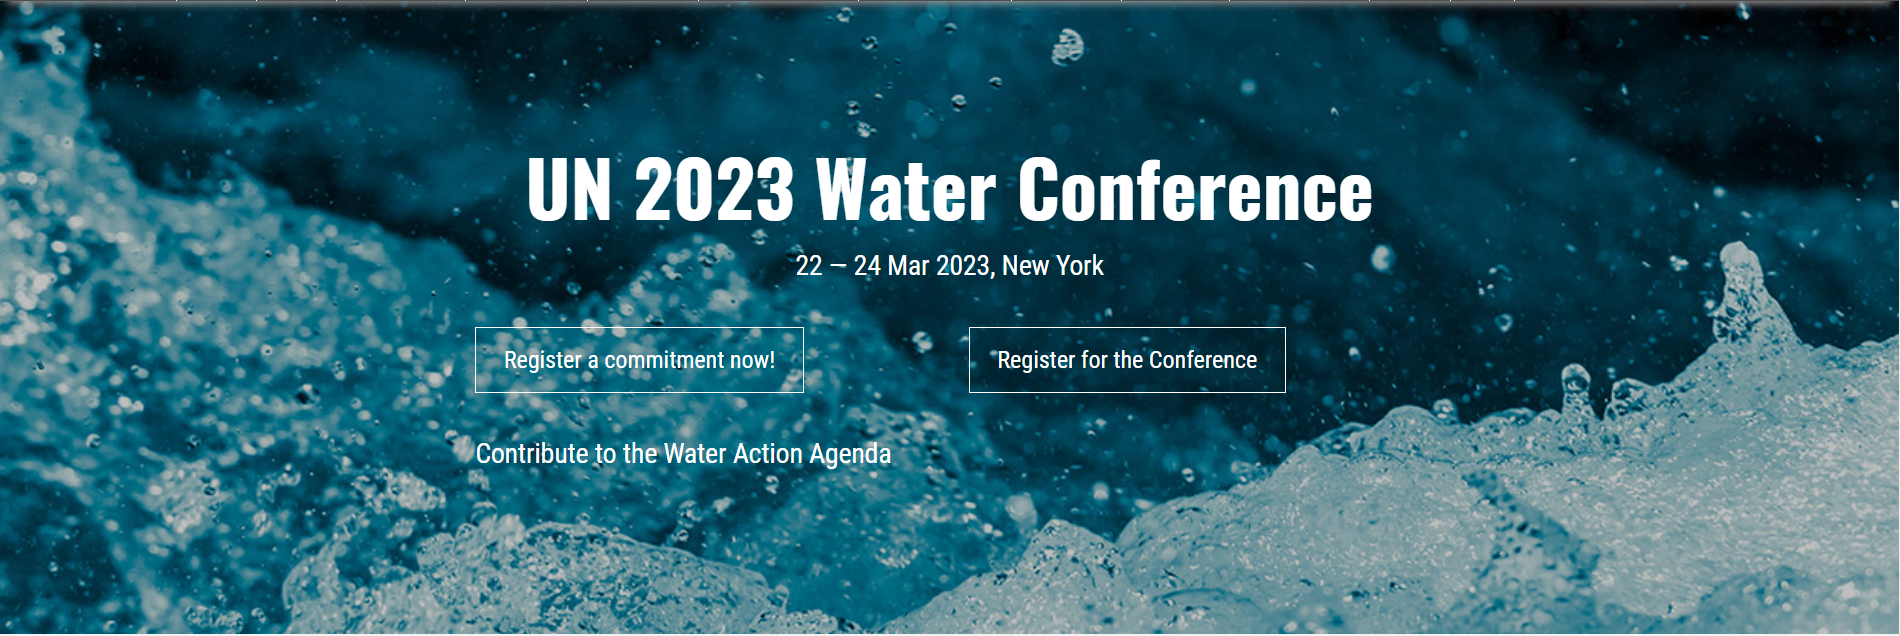 UN 2023 Water Conference ACP